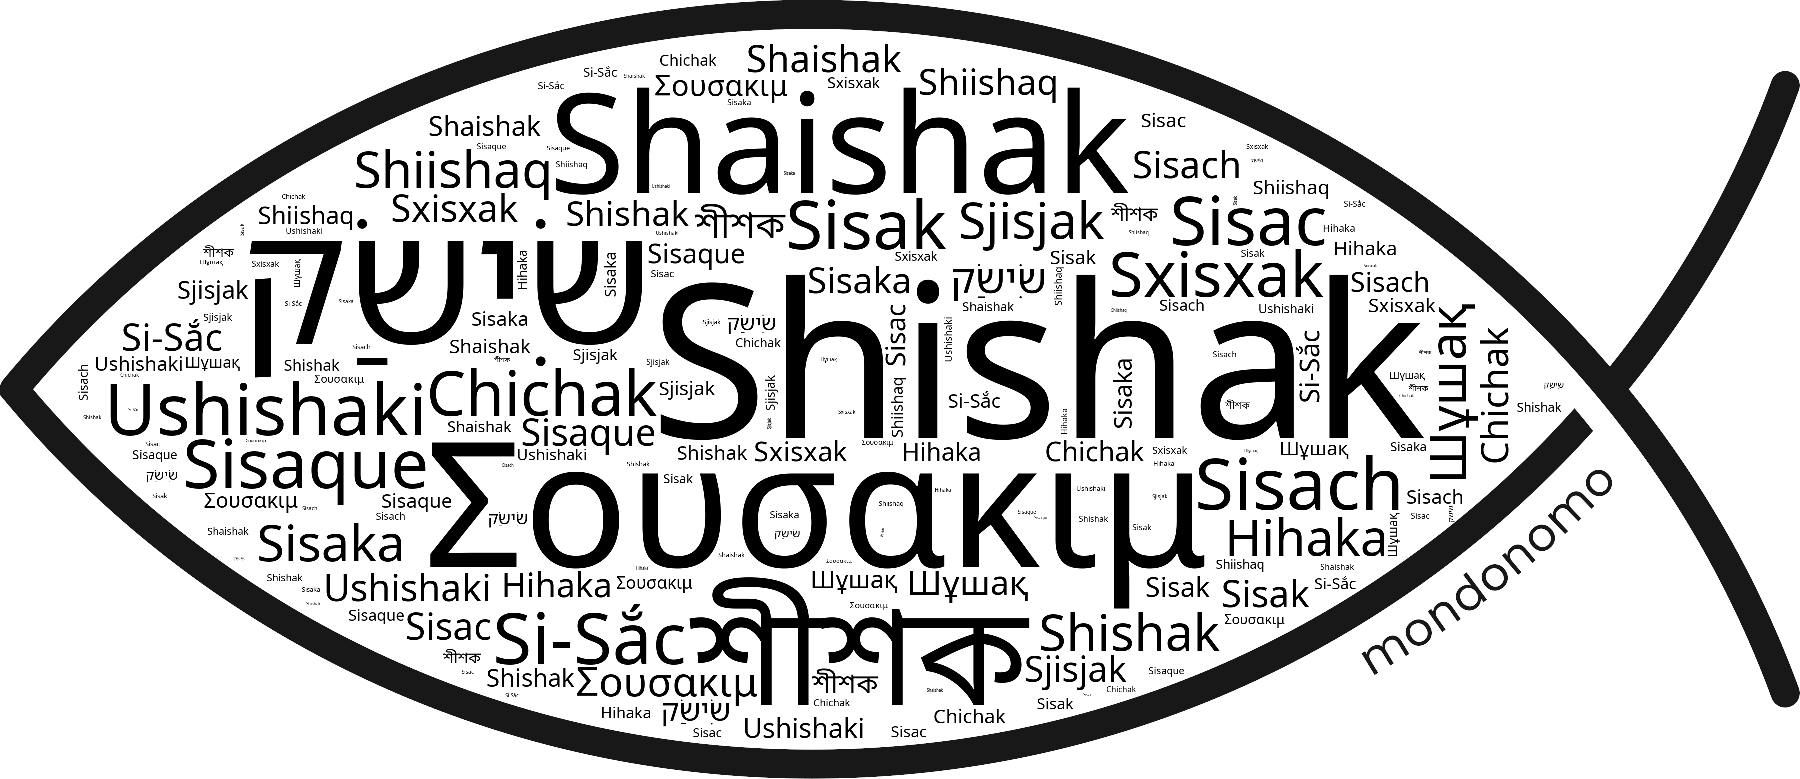 Name Shishak in the world's Bibles